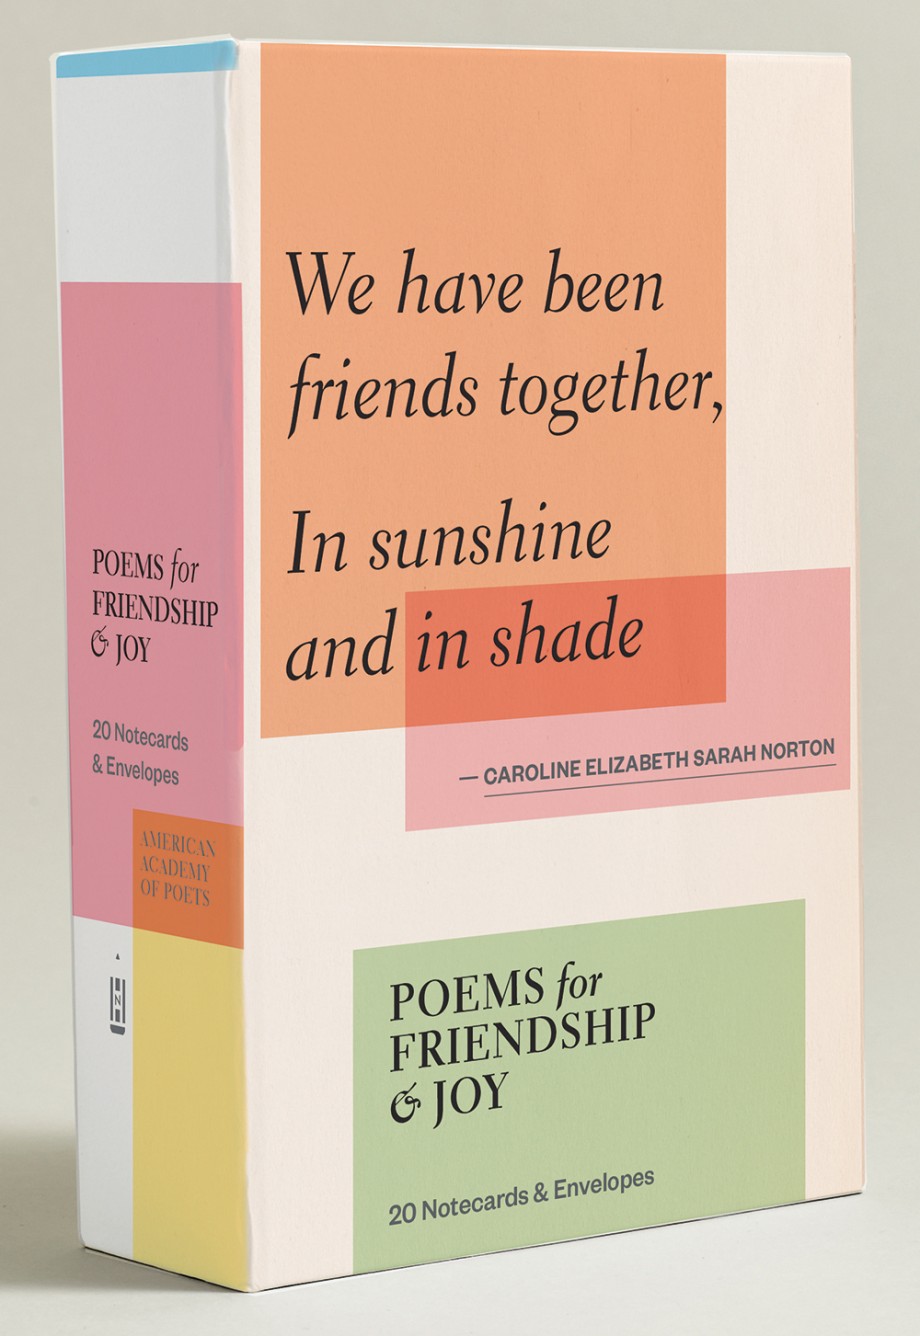 Poems for Friendship & Joy (Notecards) 20 Notecards & Envelopes